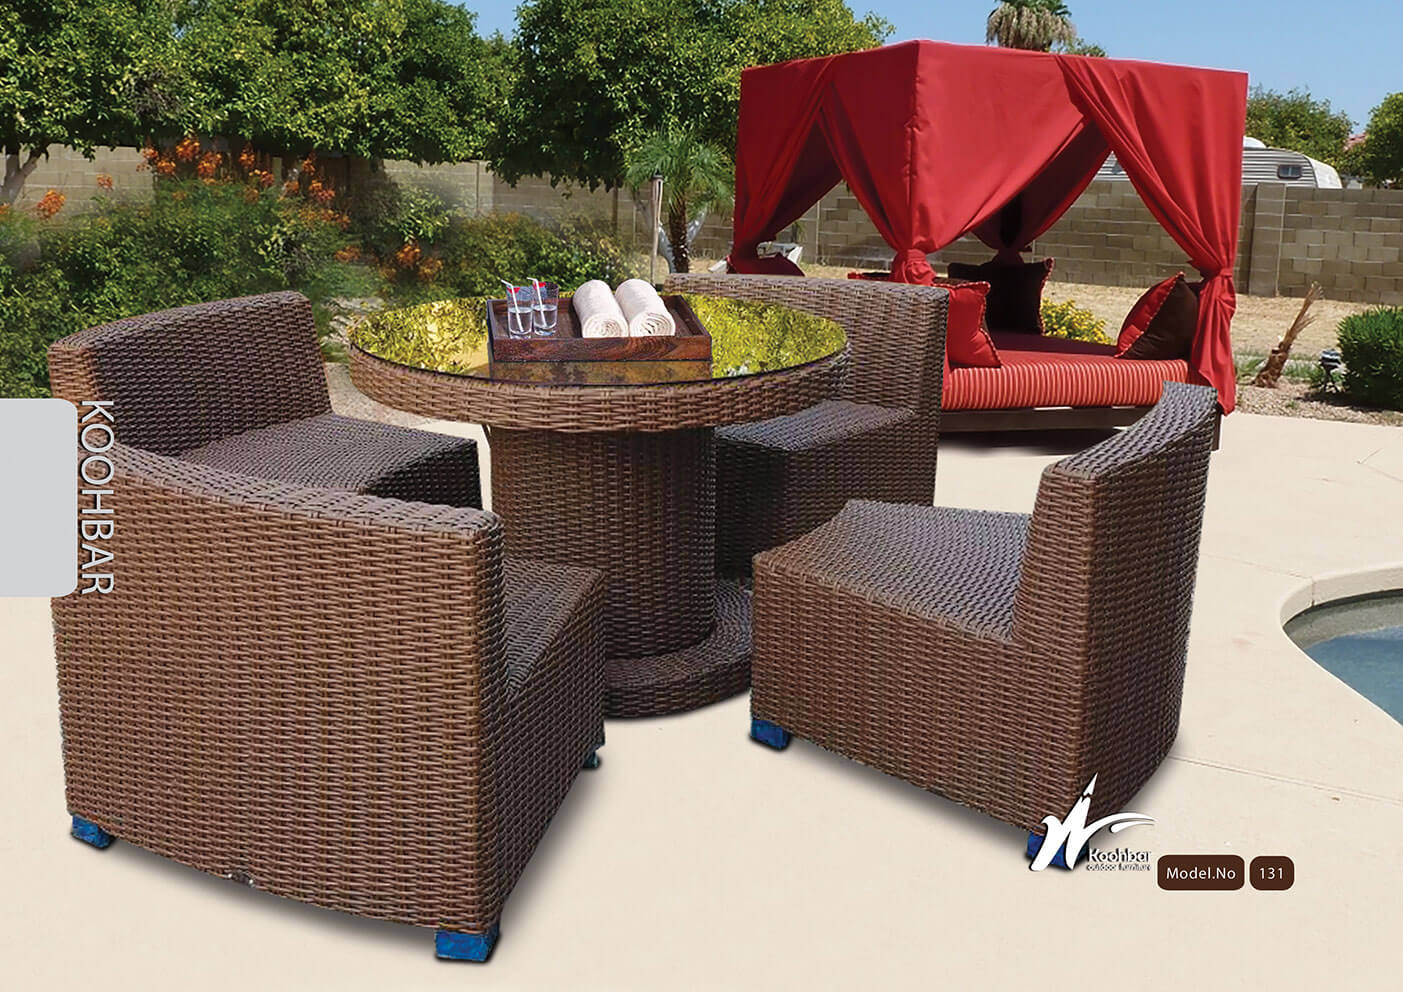 kohbar patio conversation sets 131 model0 - ست مبلمان حصیری محوطه کوهبر مدل ۱۳۱ -  - patio-conversation-sets